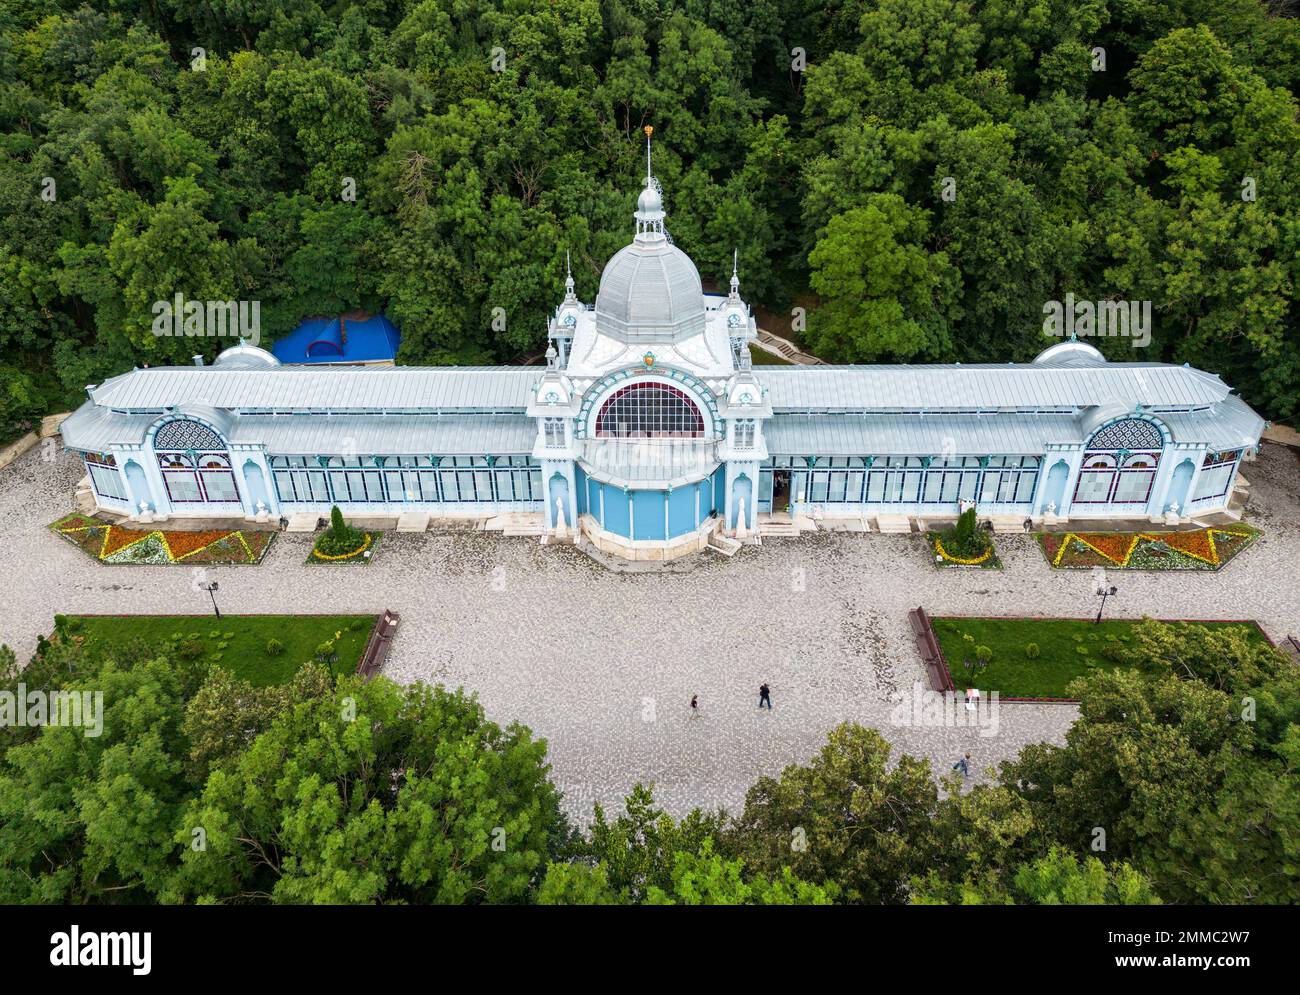 Pushkin Gallery on mountain side in Zheleznovodsk, Stavropol Krai, Russia. Aerial view of historical landmark of Zheleznovodsk installed in 1902. Them Stock Photo